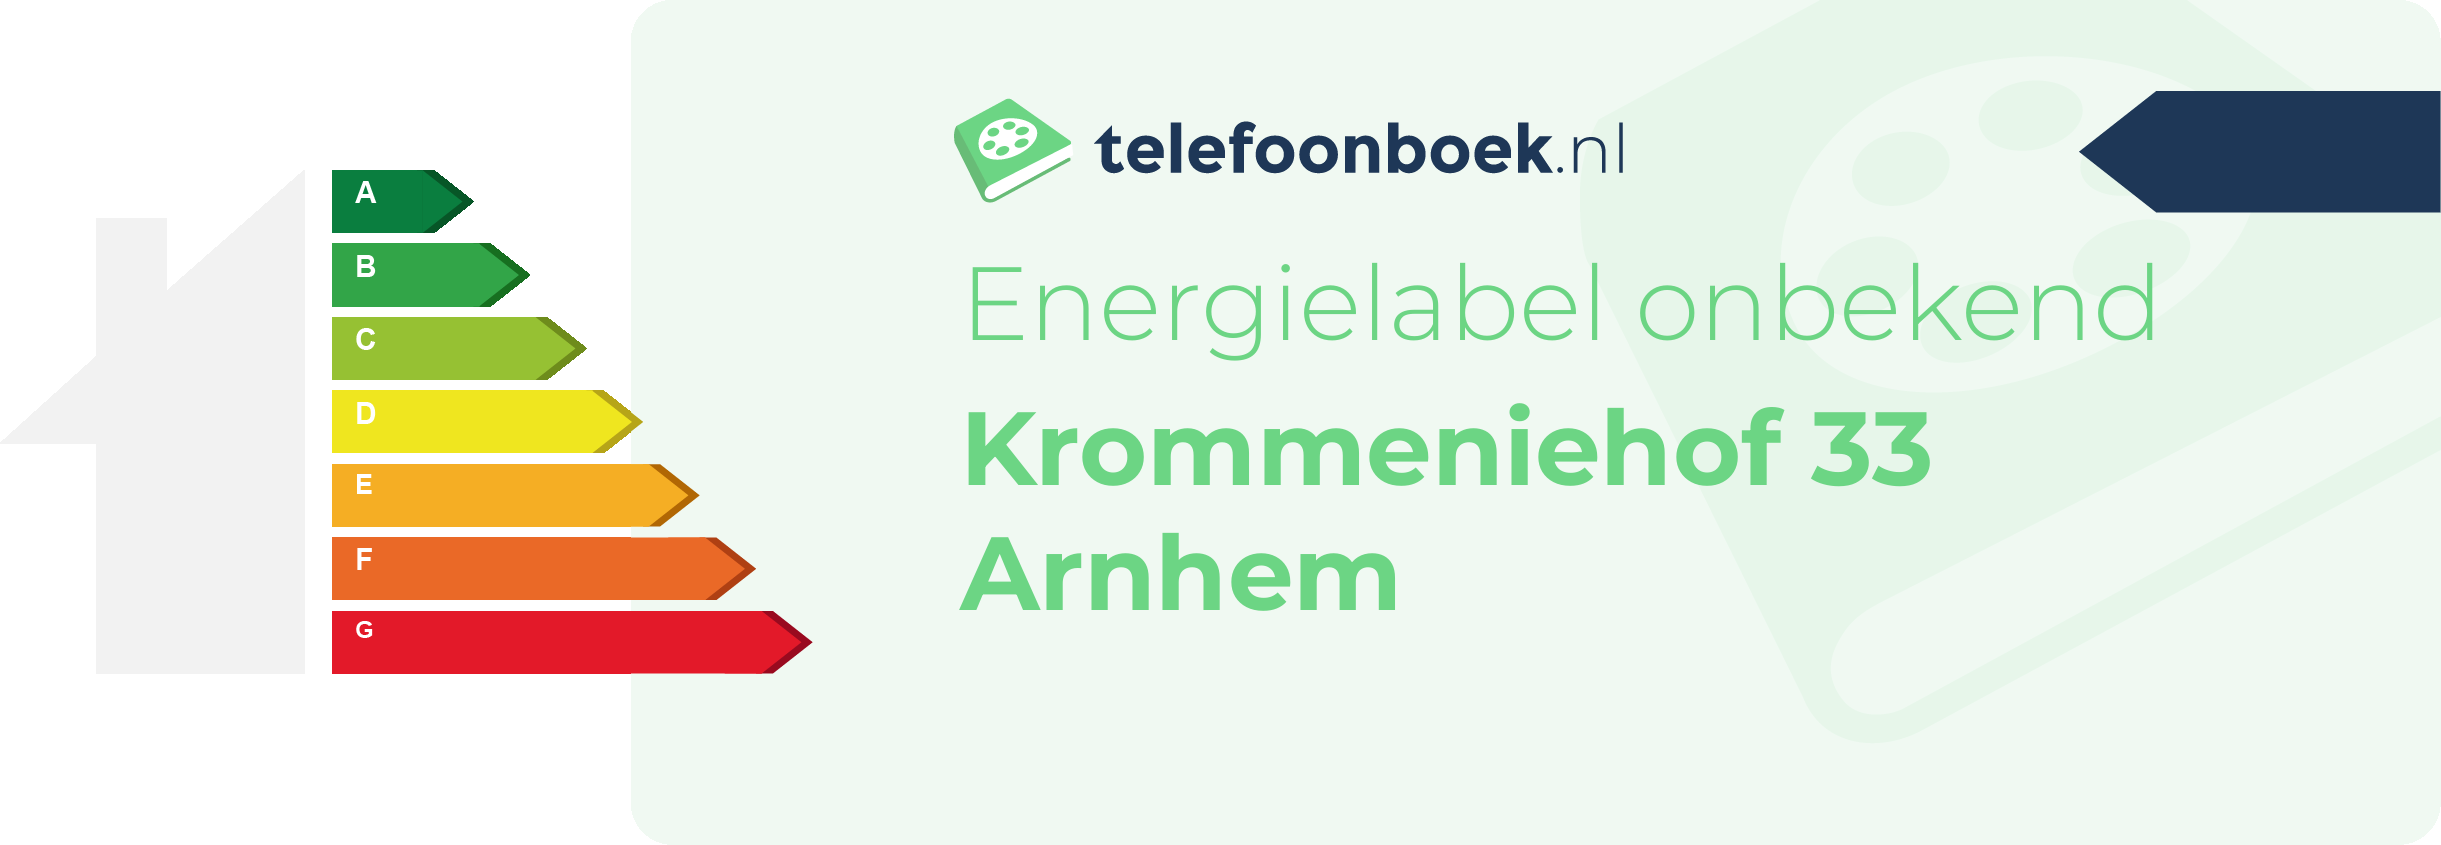 Energielabel Krommeniehof 33 Arnhem